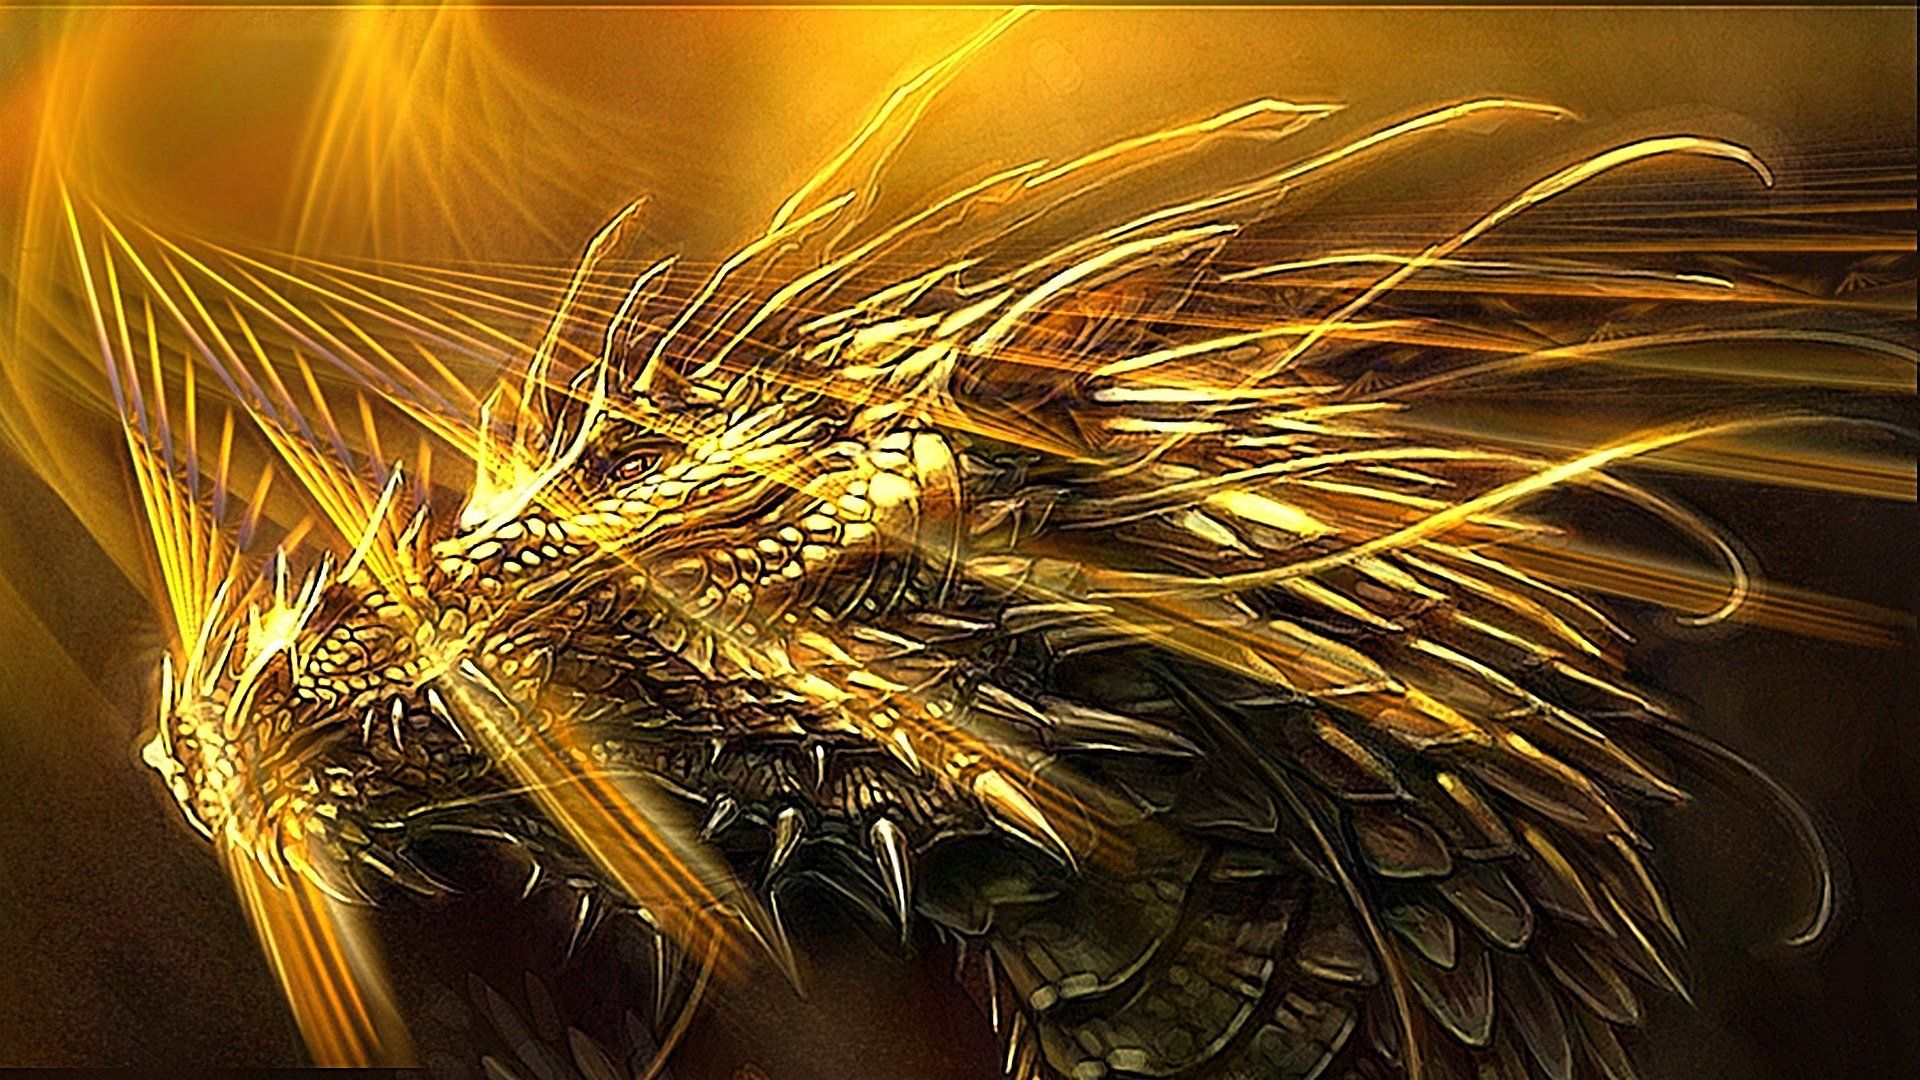 Golden Dragon by ilnanny on DeviantArt